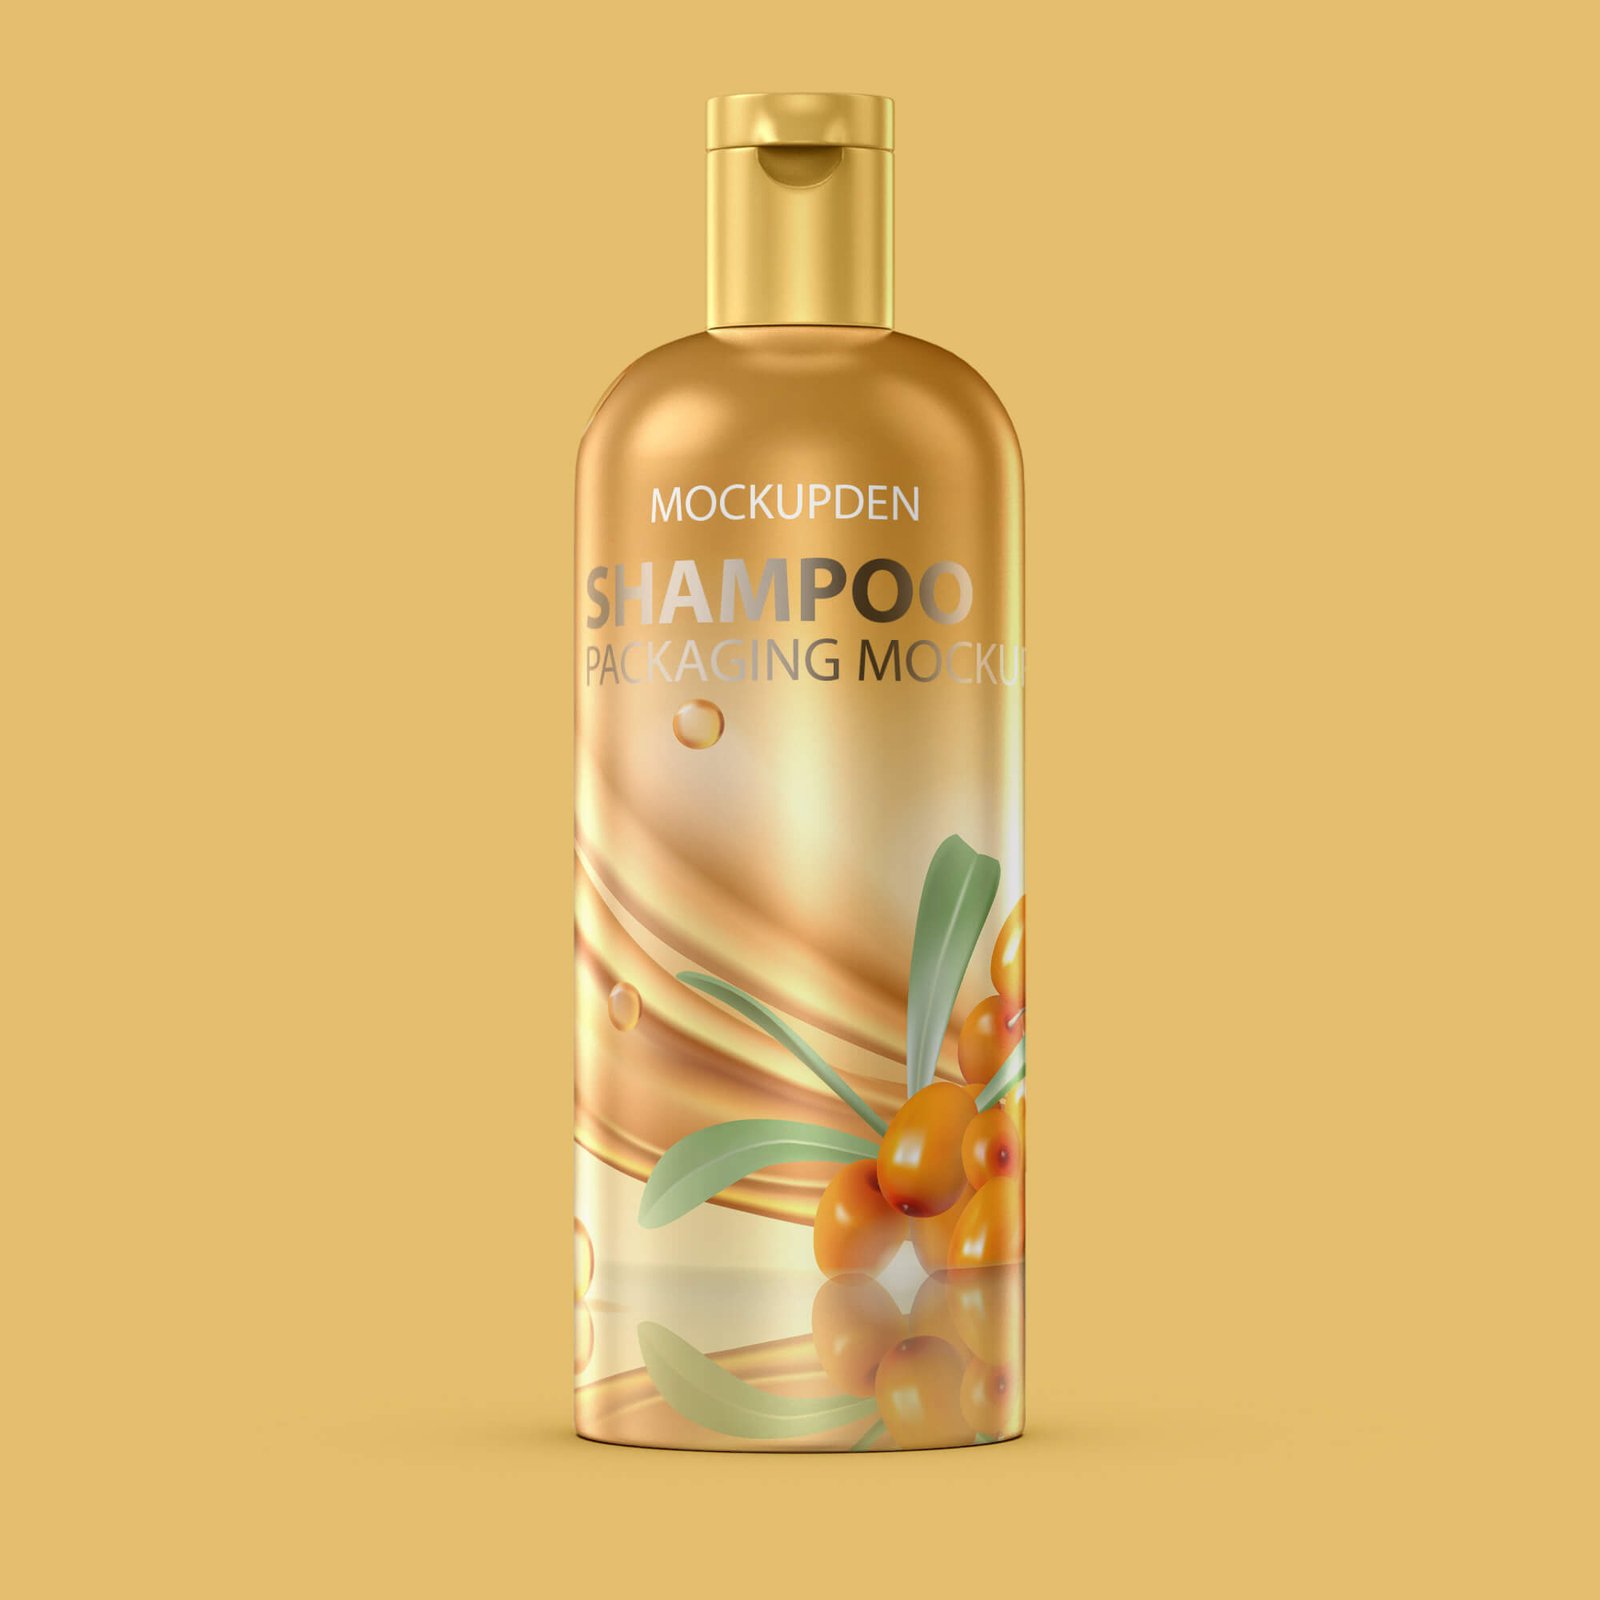 Design Free Shampoo Packaging Mockup PSD Template